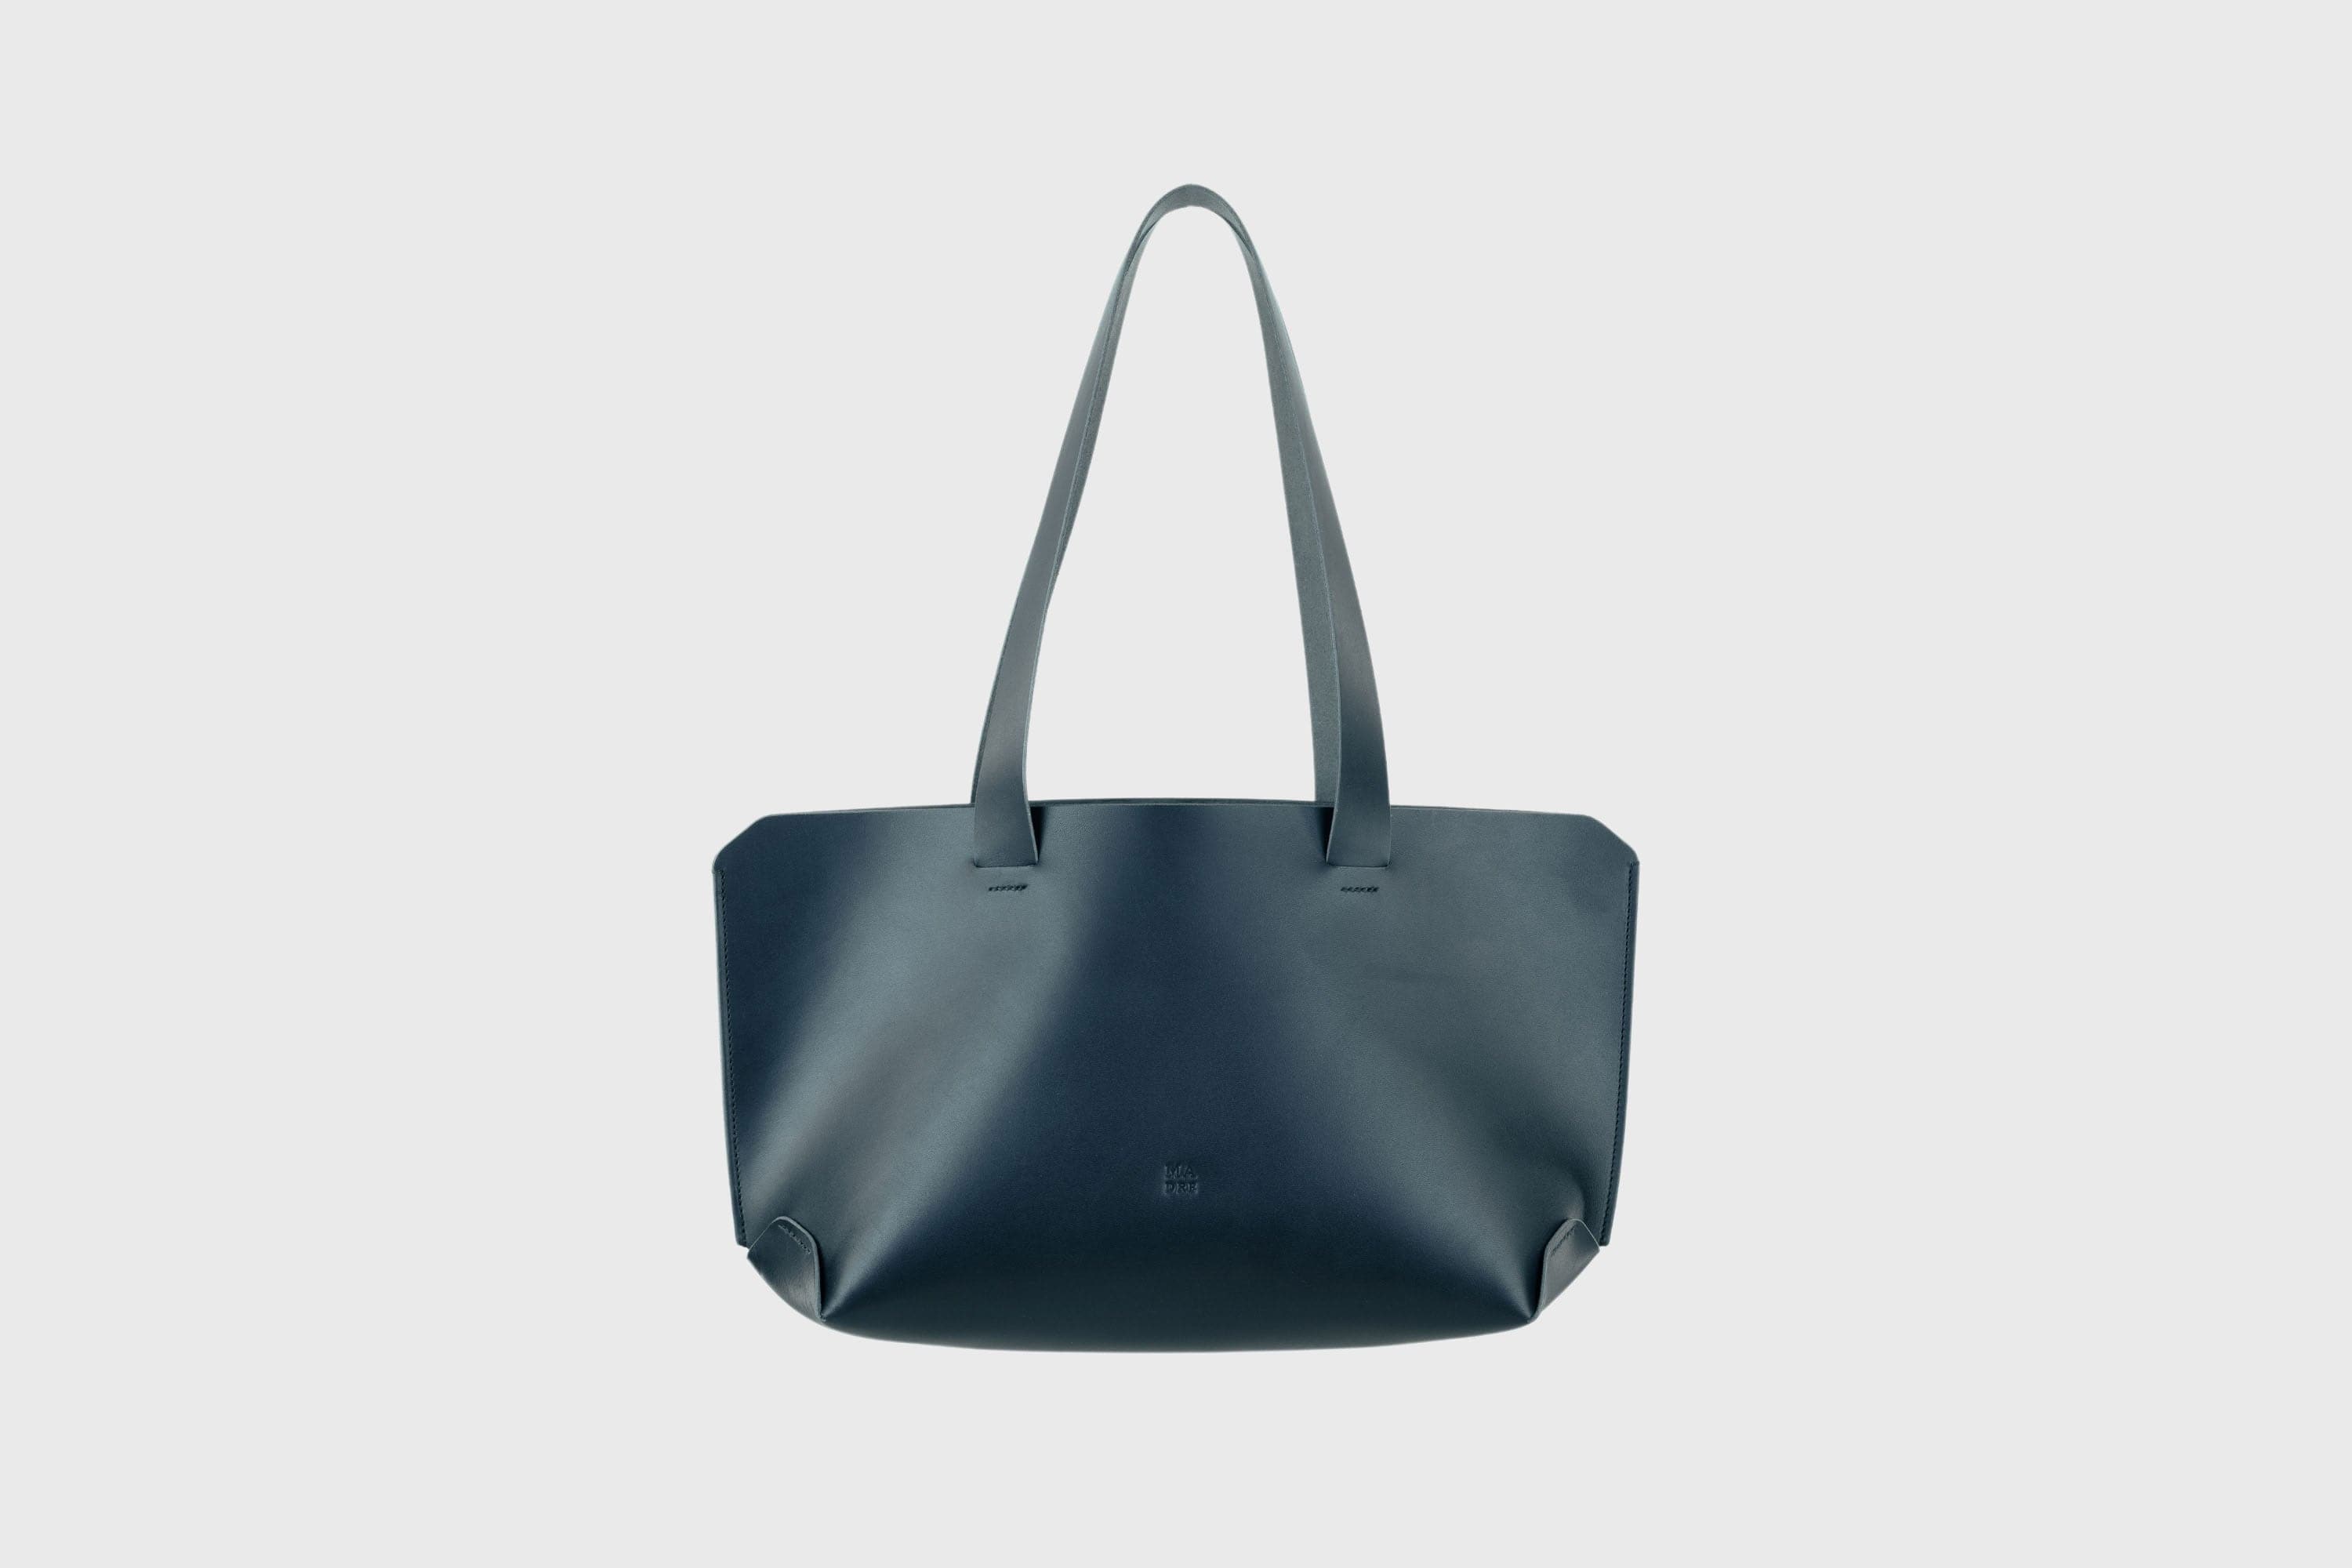 Bag Tote Leather Dark Blue Vegtan Full Grain Leather Modern Design By Manuel Dreesmann Atelier Madre Barcelona Spain